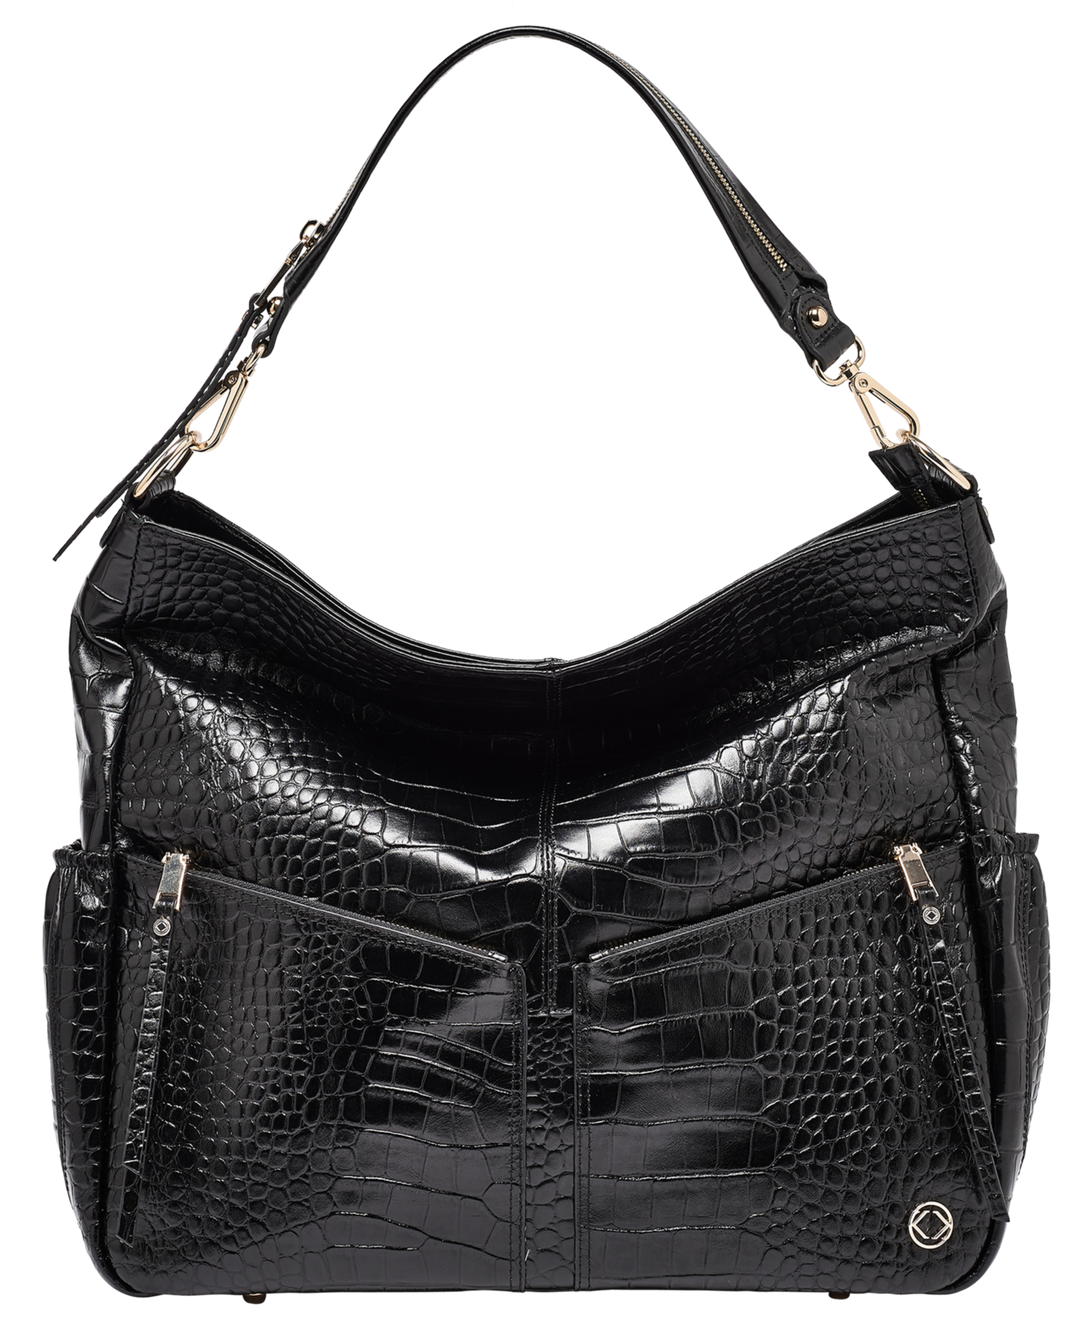 Leather Weekender Bags | Lennox High Sheen Embossed Black Leather Handbag - FINAL SALE